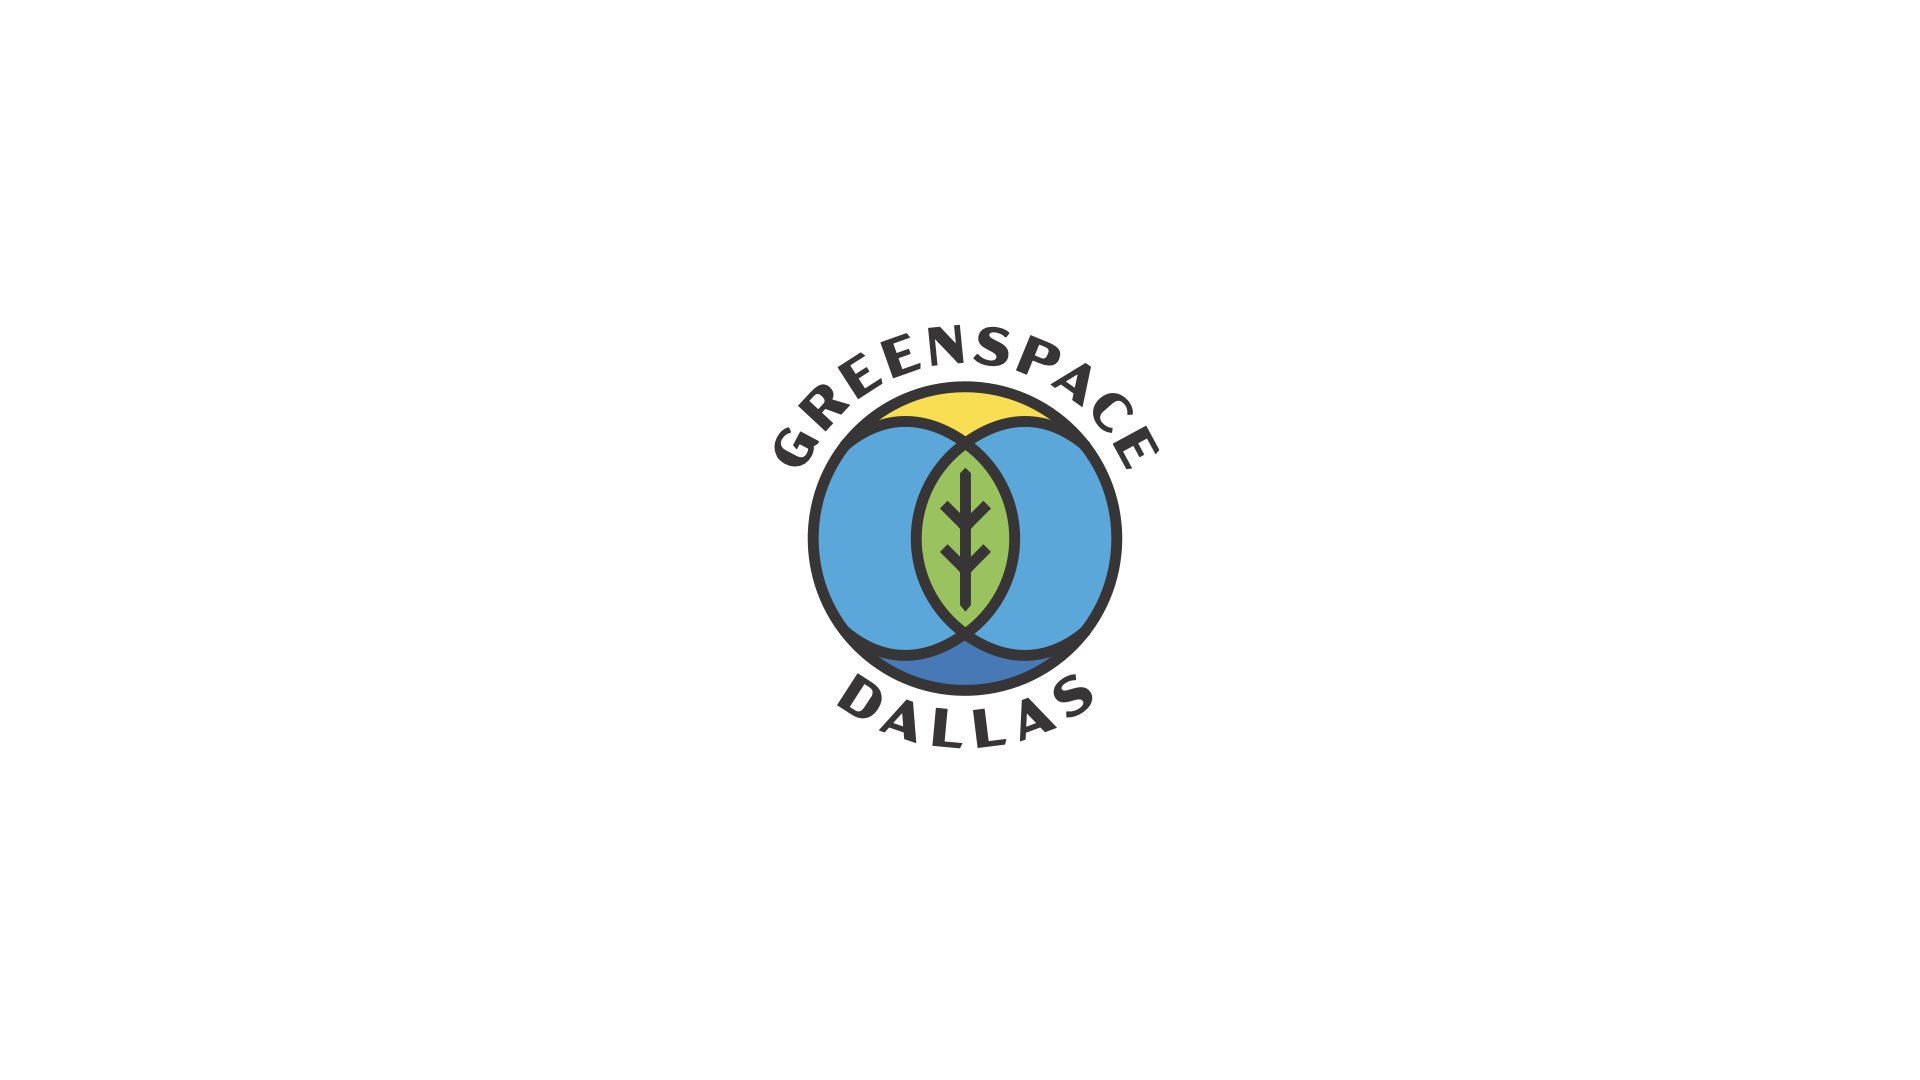 Greenspace Dallas R1A copy.001.jpeg